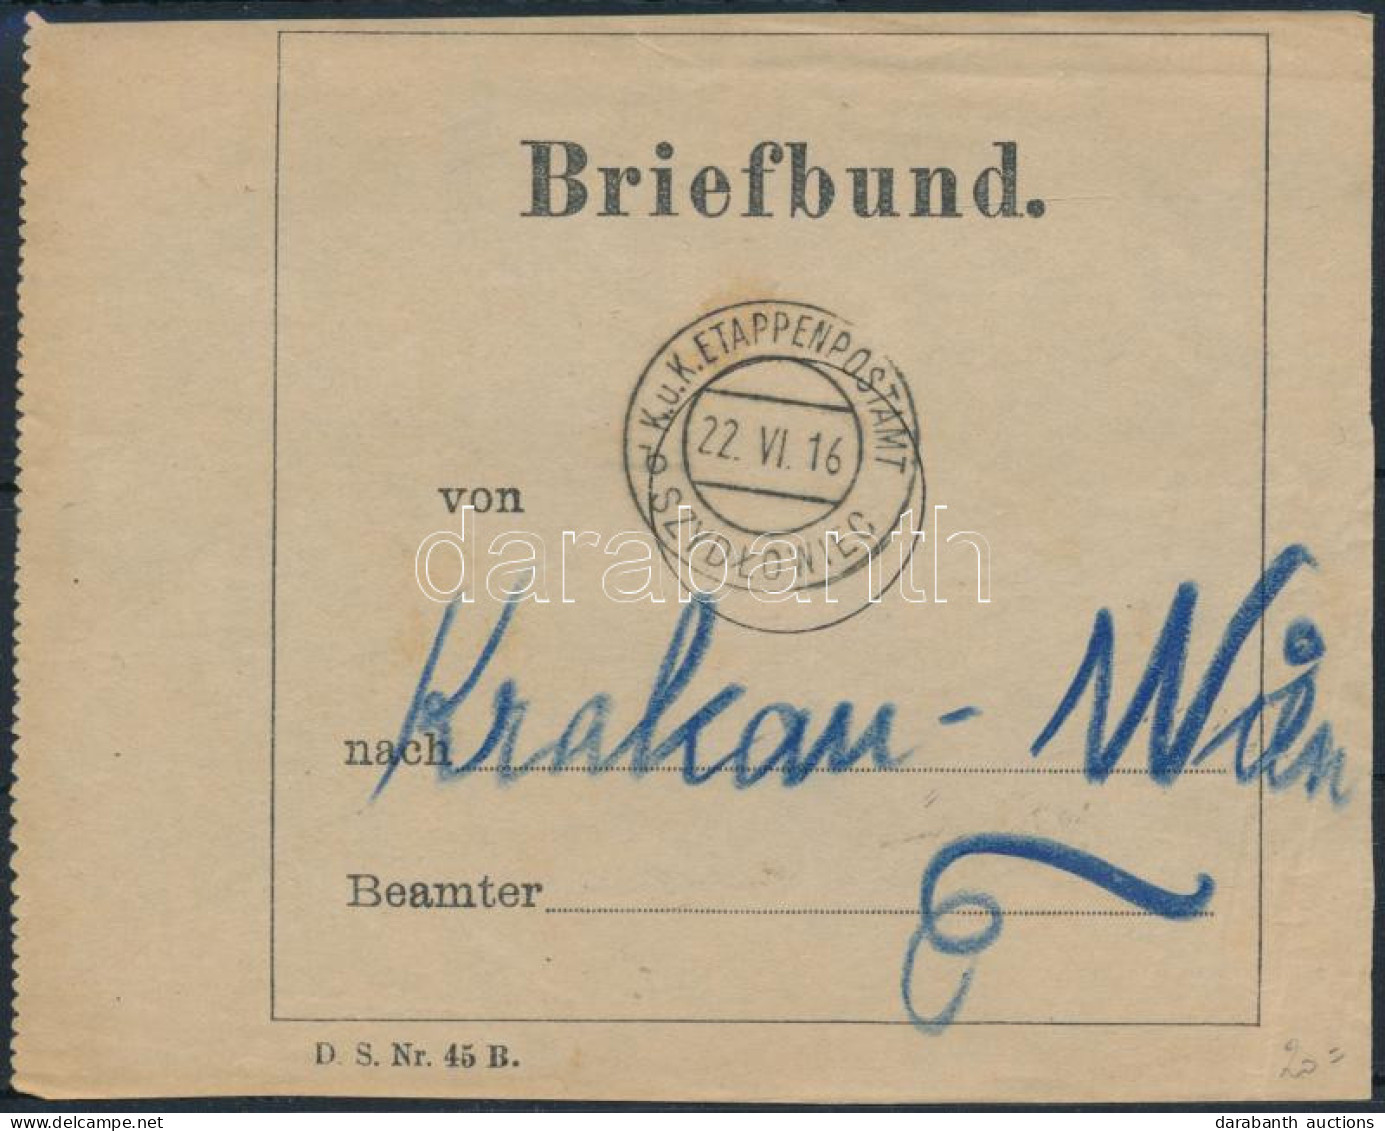 1916 Levélköteg Címzés "EP SZYDLOWIECZ B" - Krakau -Wien - Other & Unclassified